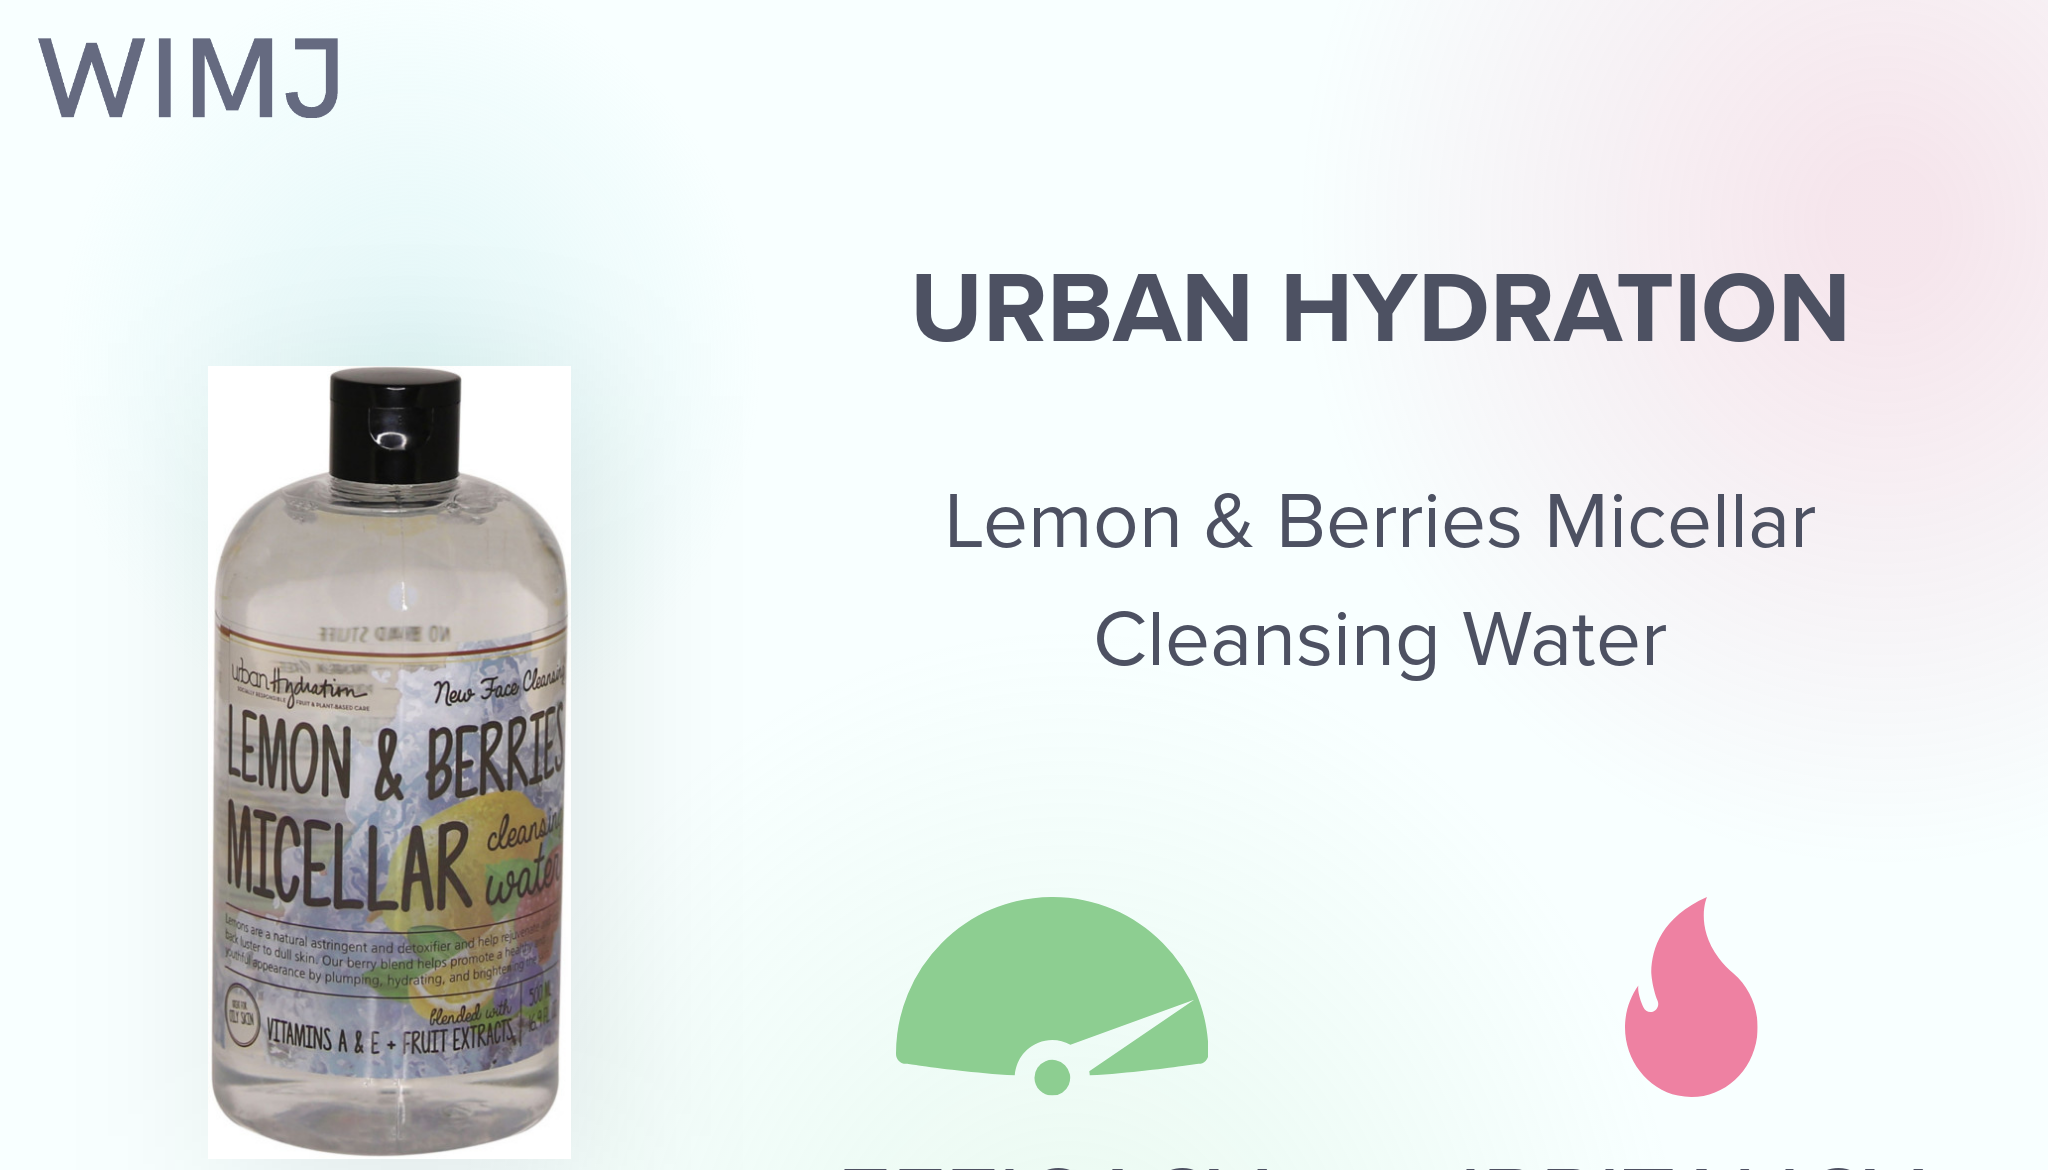 Review: Urban Hydration - Lemon & Berries Micellar Cleansing Water - WIMJ